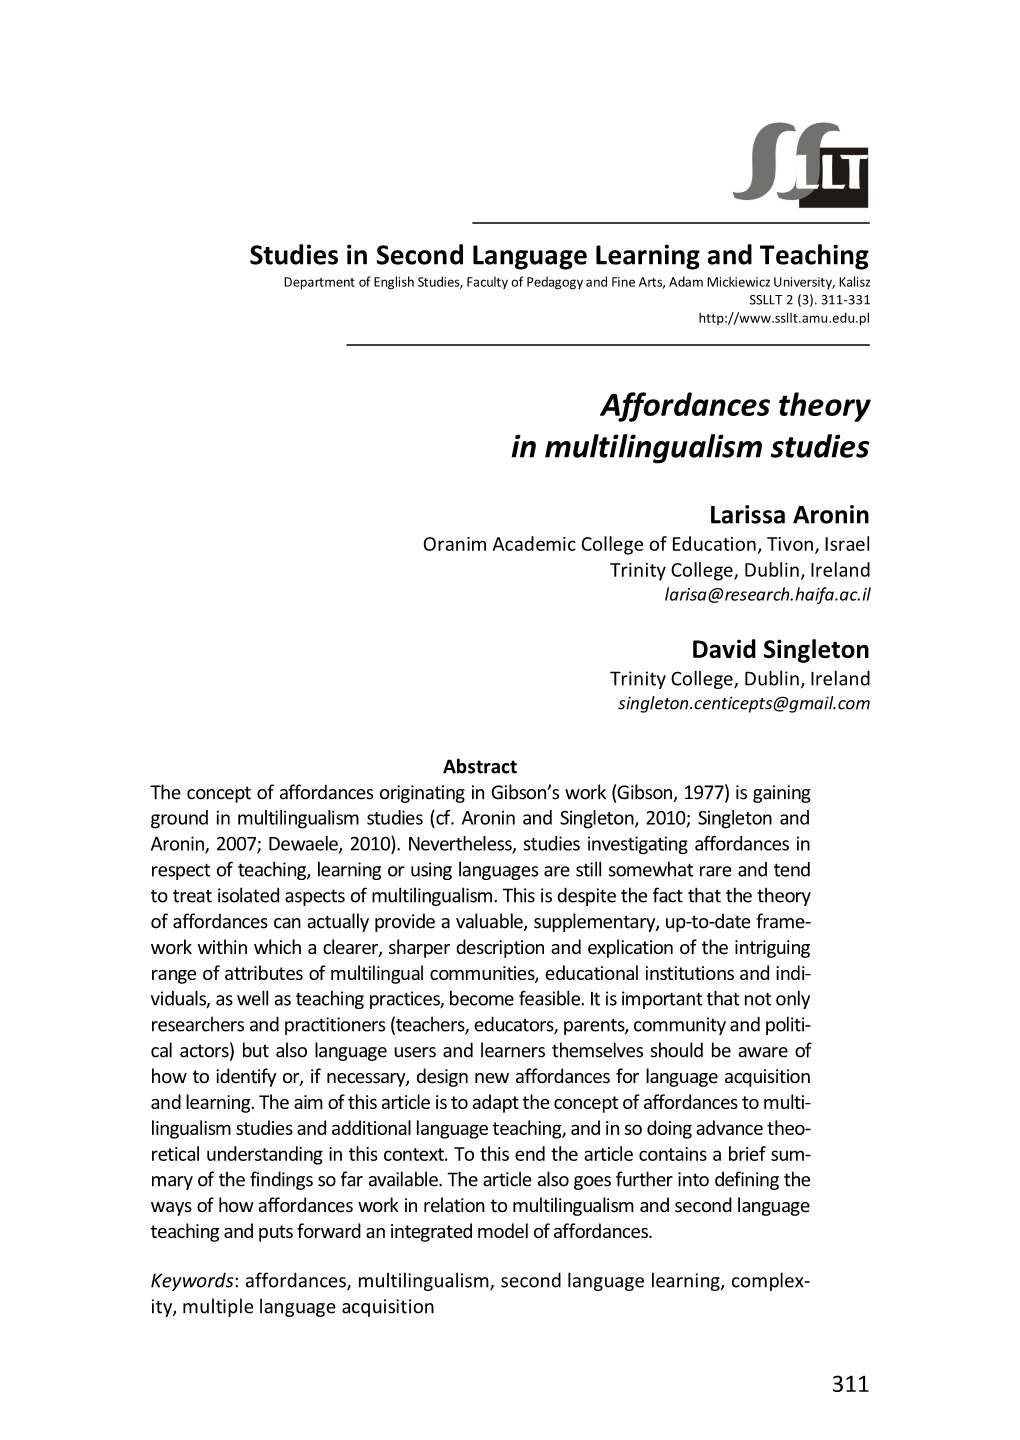 Affordances Theory in Multilingualism Studies